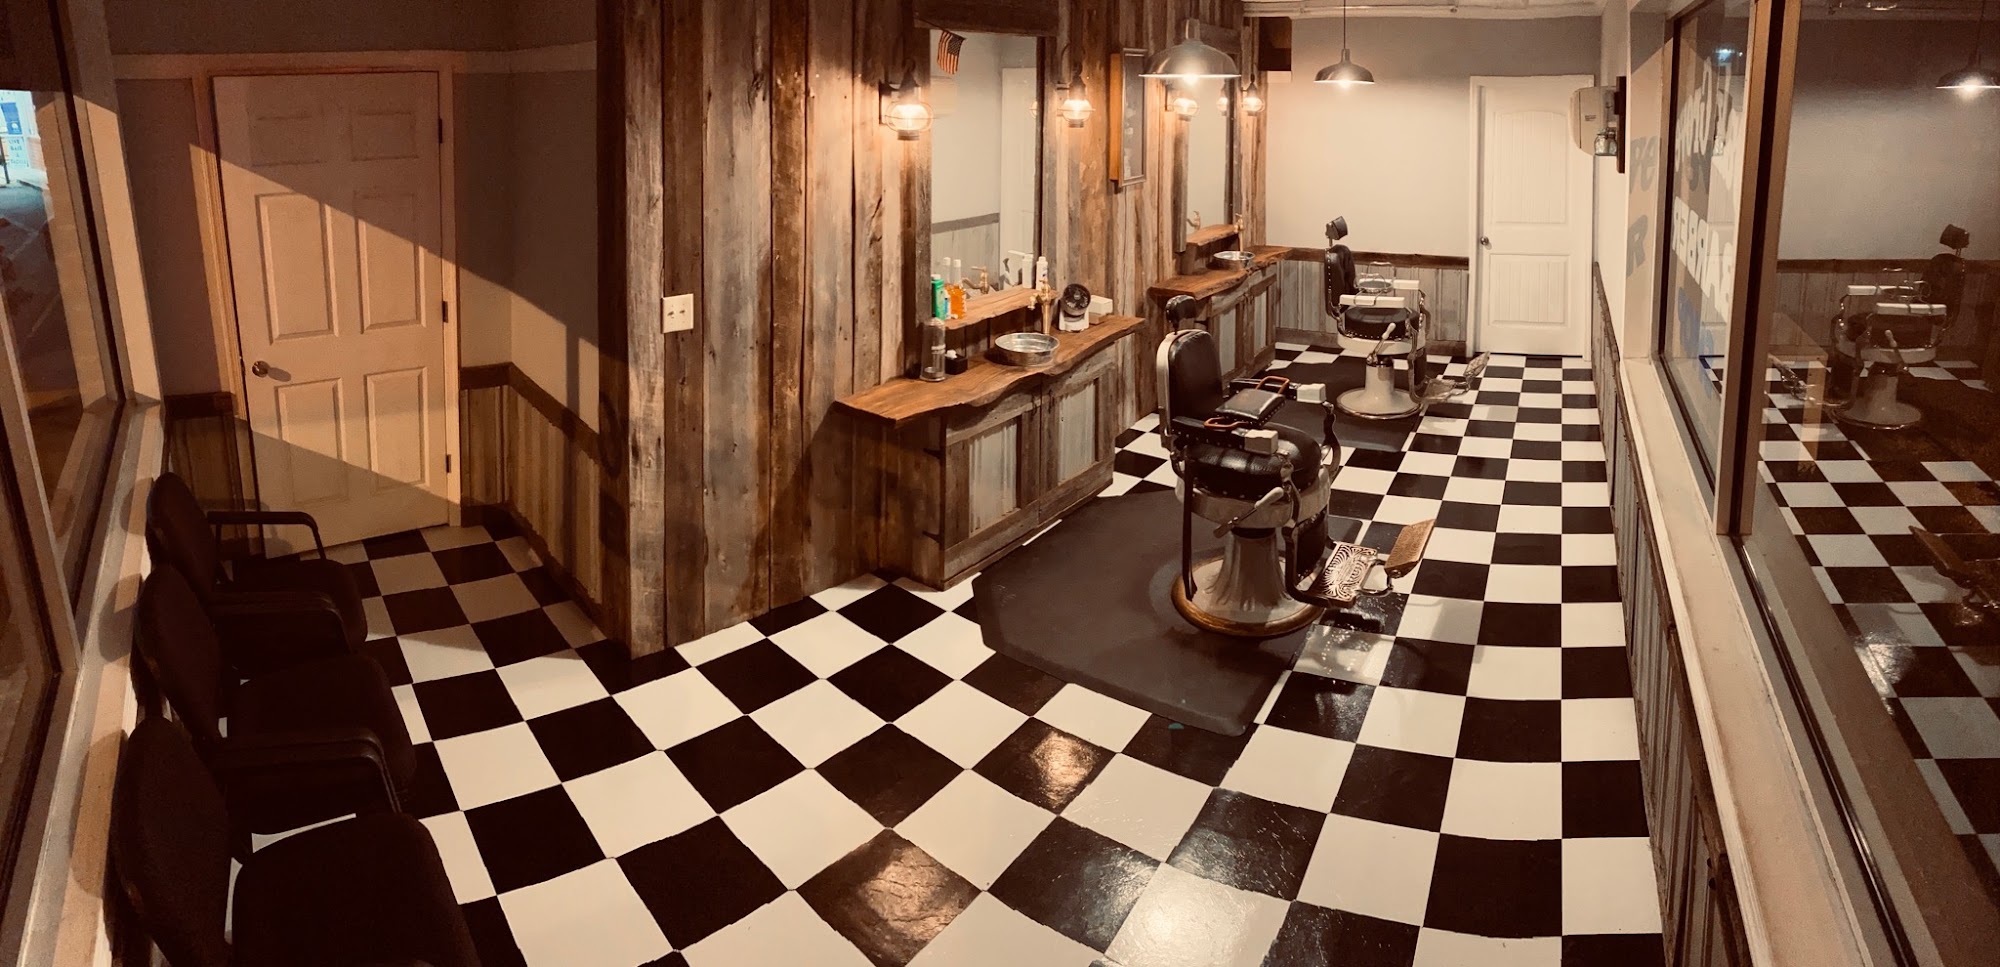 Oak Grove Barber Shop